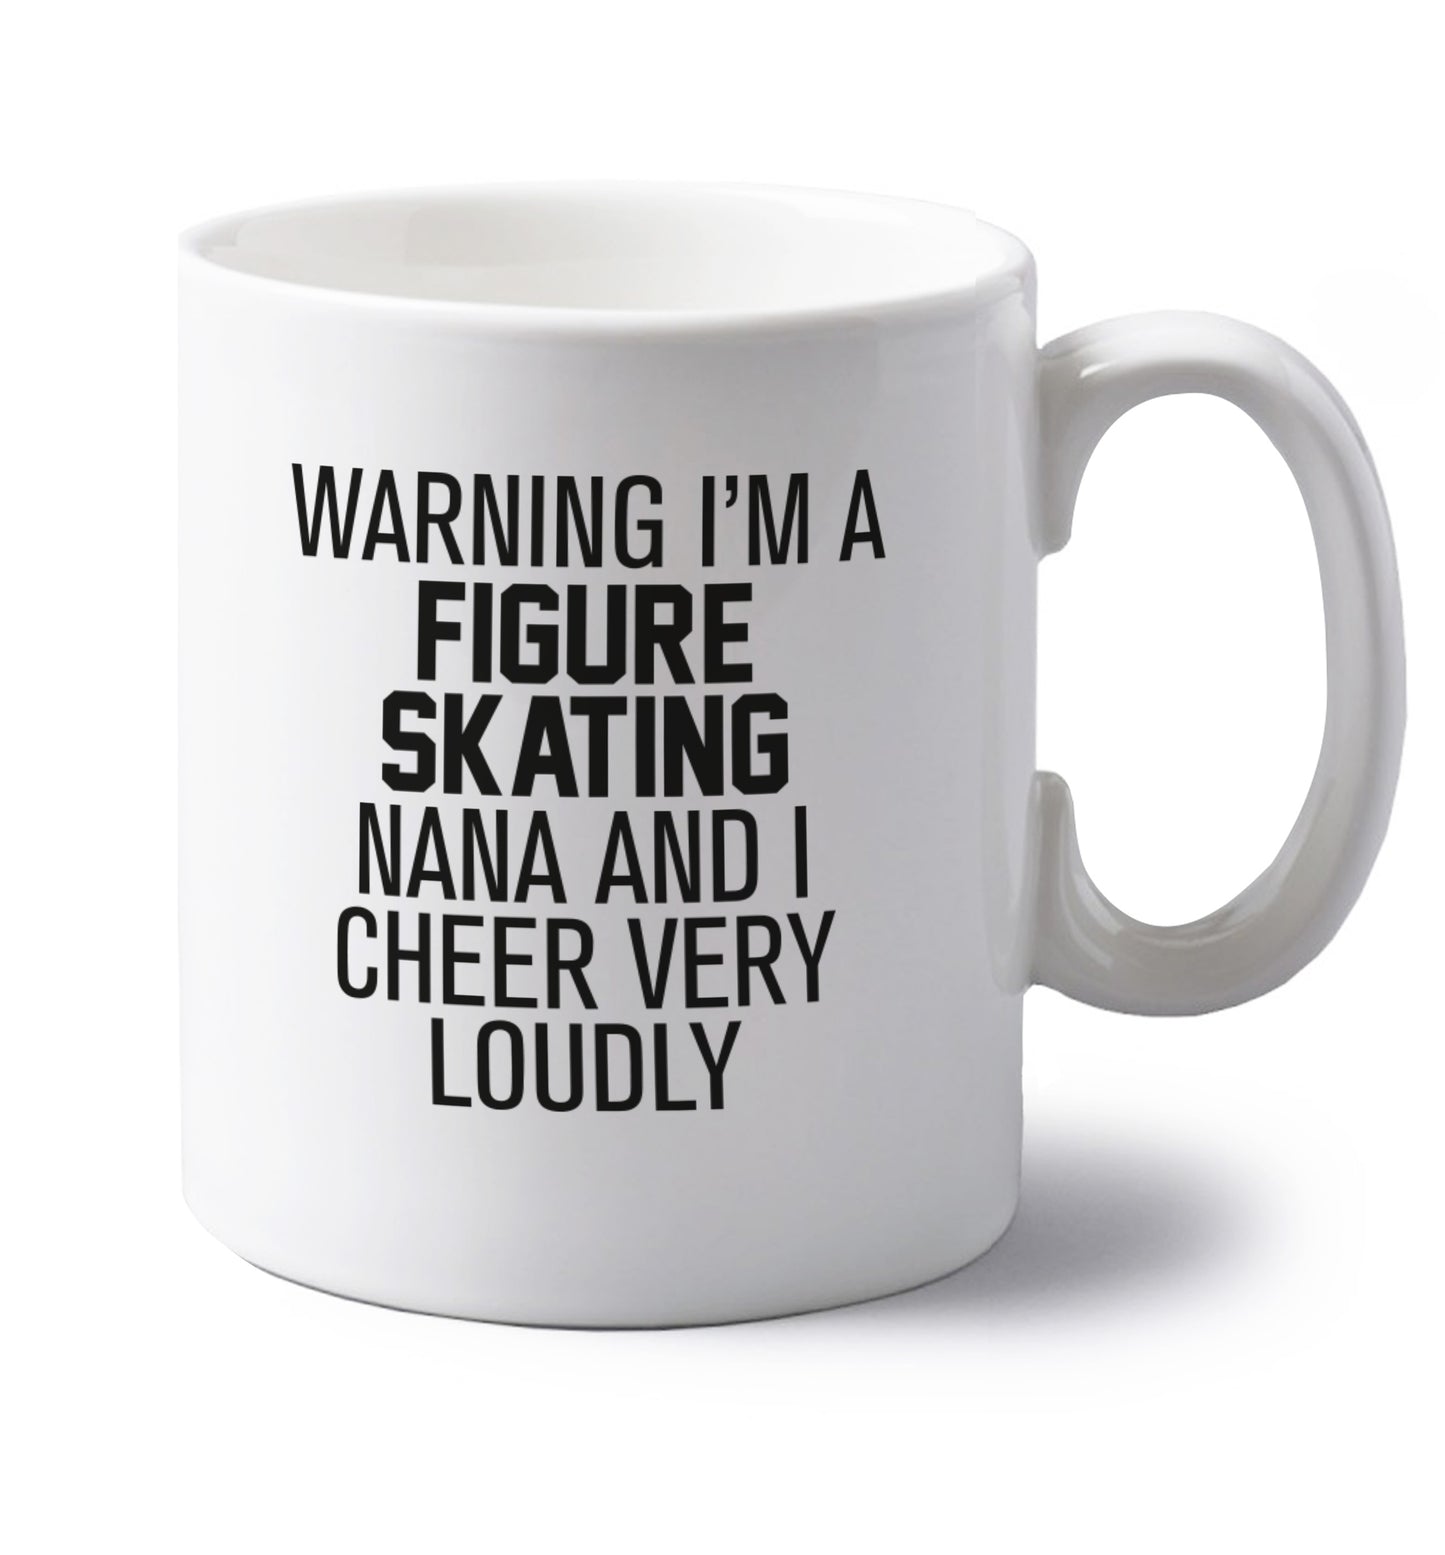 Warning I'm a figure skating nana and I cheer very loudly left handed white ceramic mug 